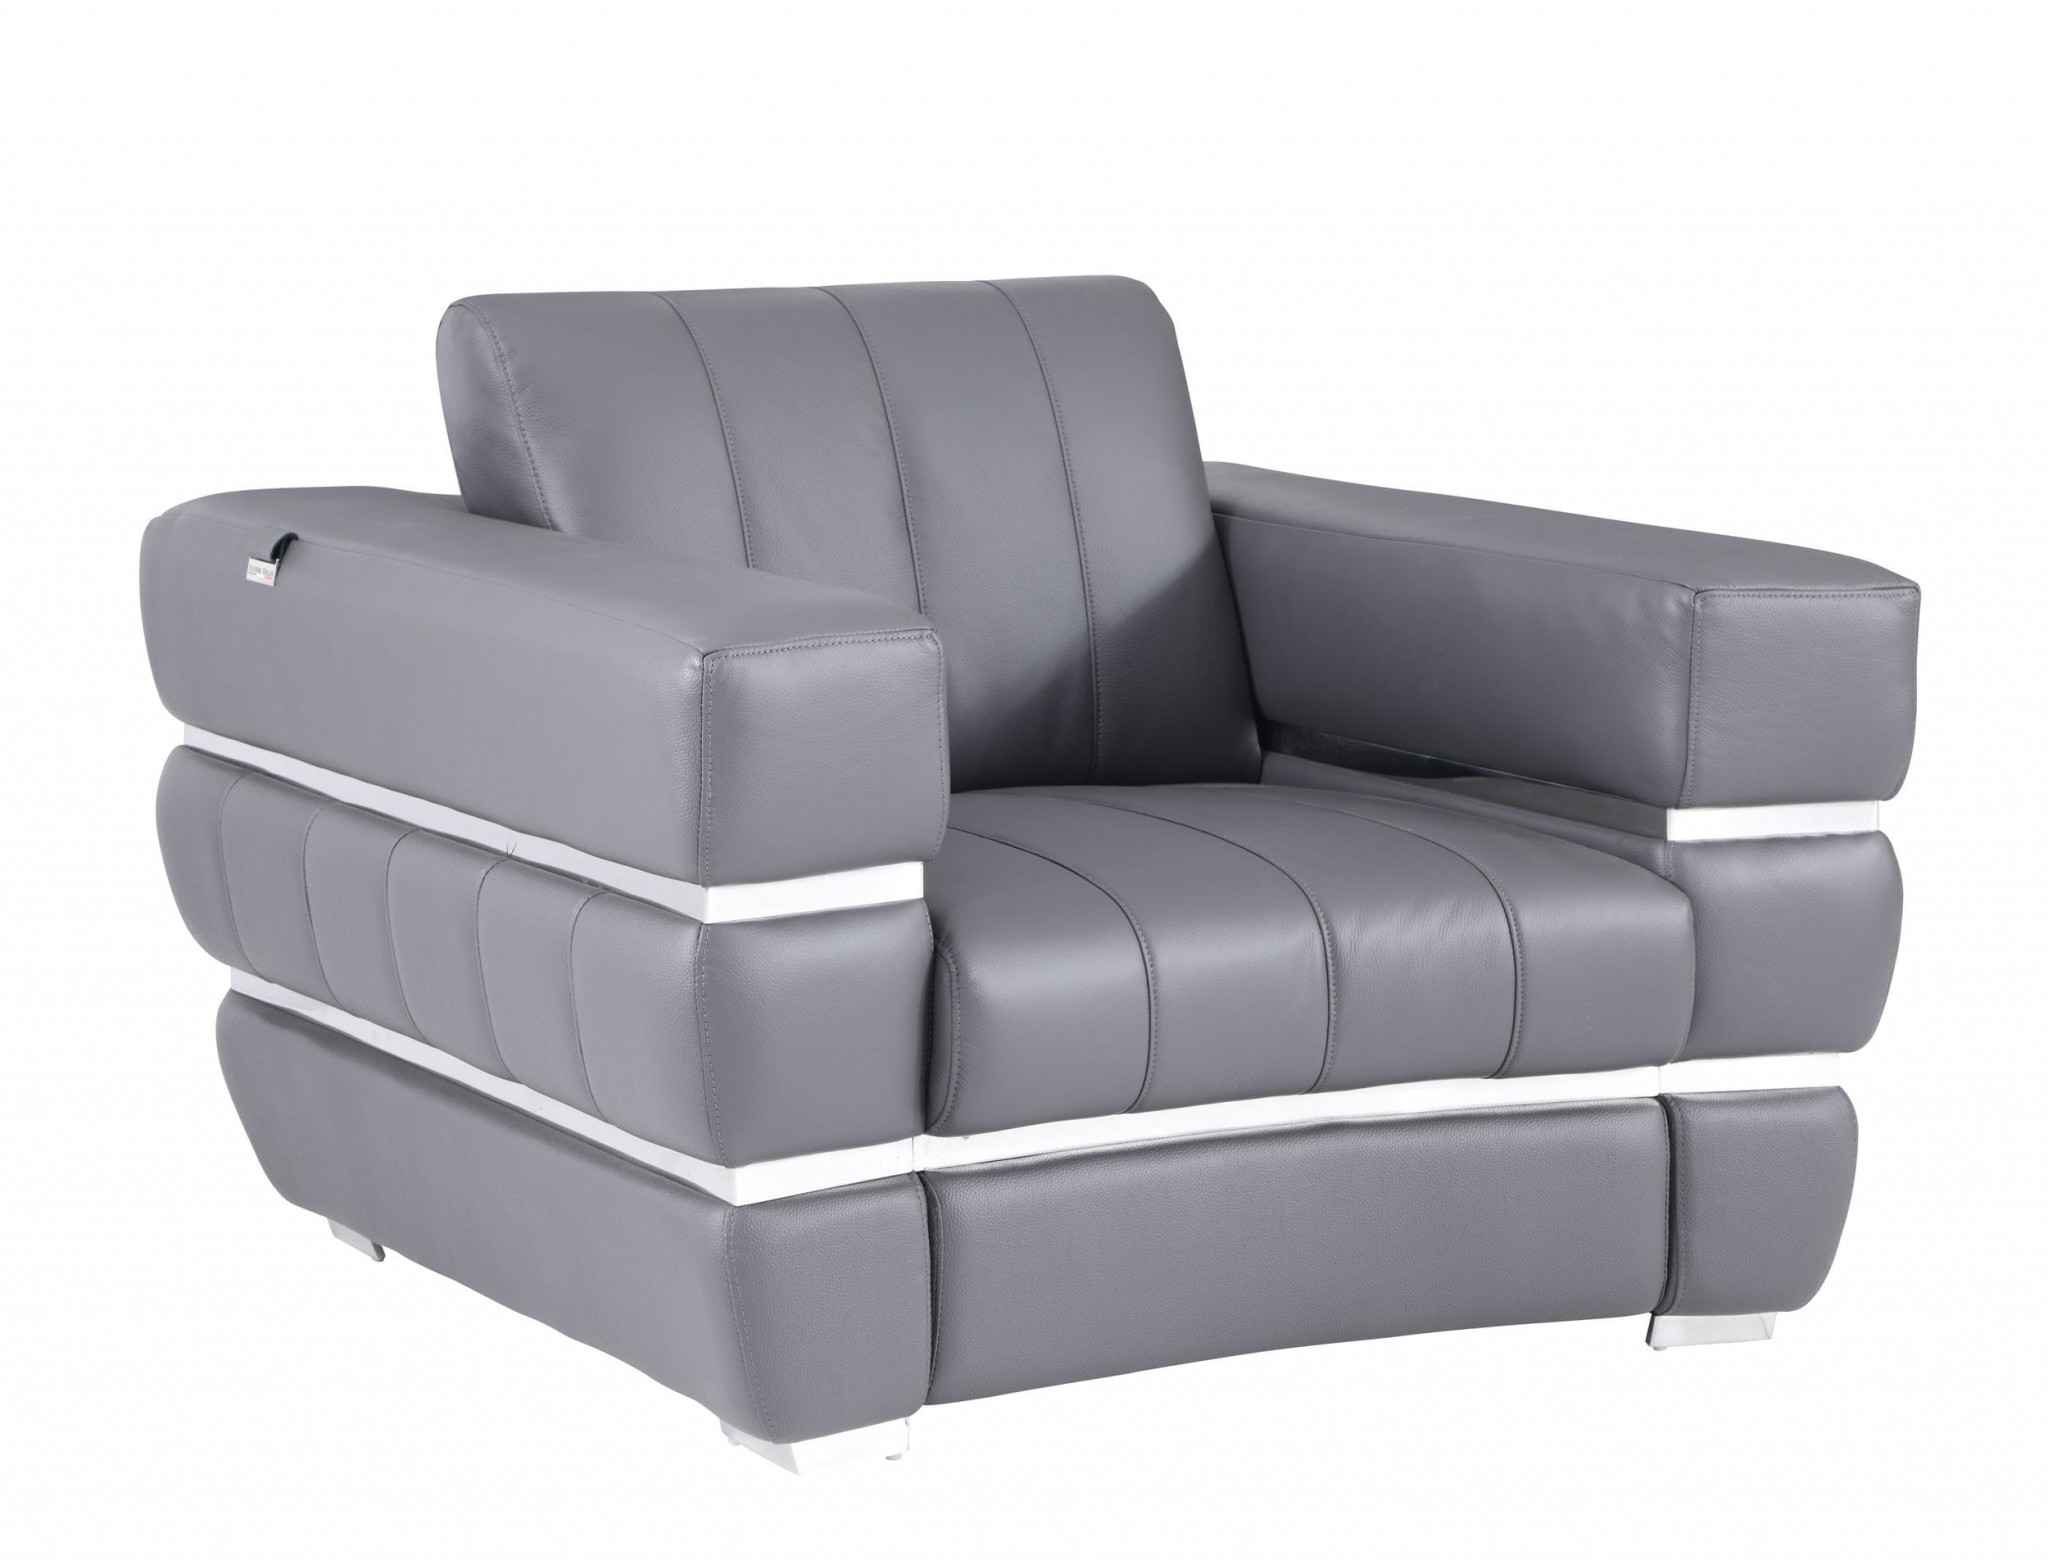 Charcoal Gray Stripe Top Grade Italian Leather Chair